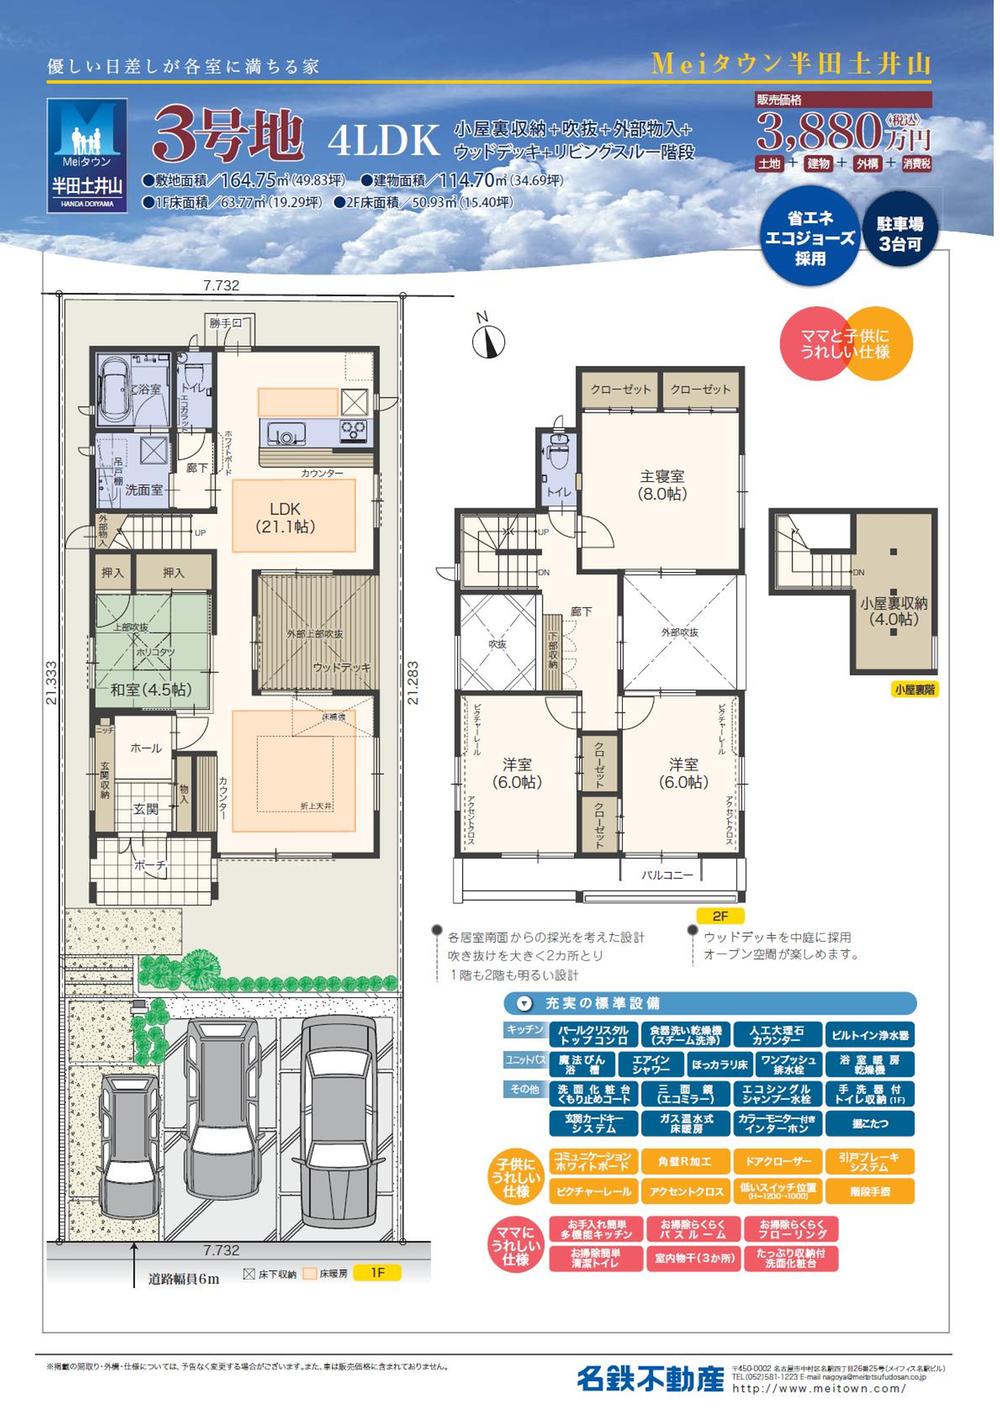 Floor plan. (No. 3 locations), Price 38,800,000 yen, 4LDK, Land area 164.75 sq m , Building area 114.7 sq m